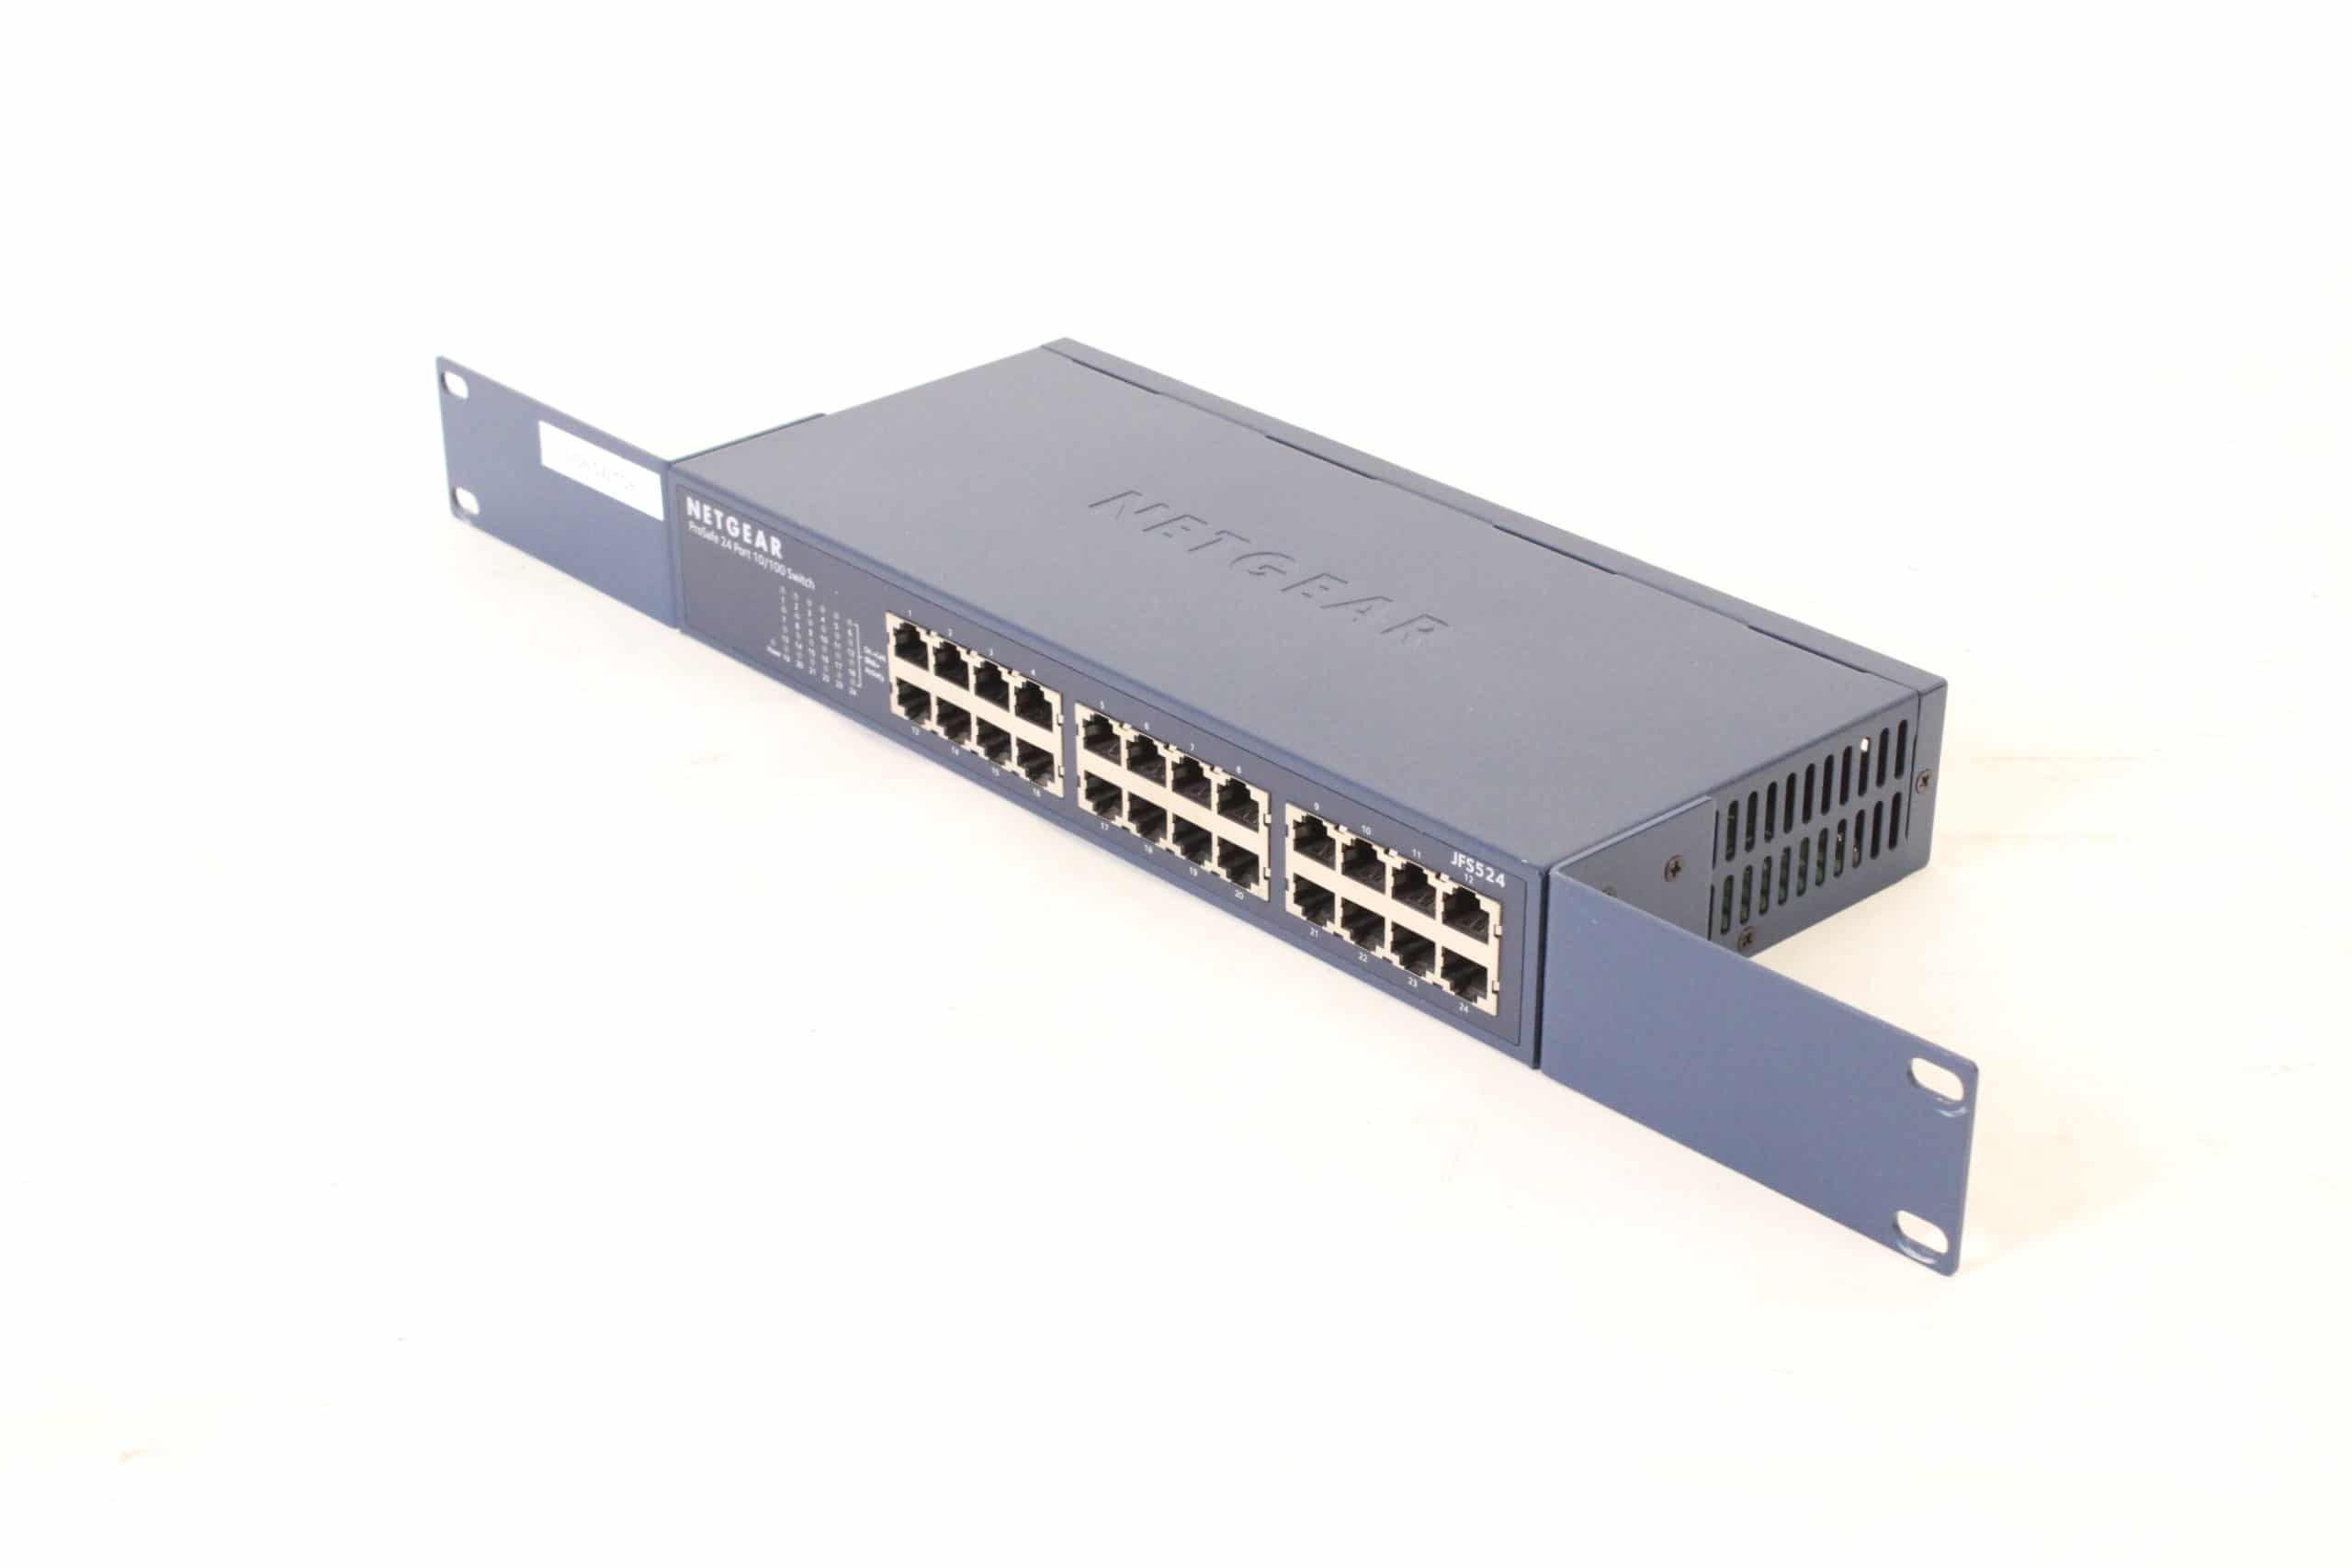 Switch réseau ethernet rackable Netgear ProSafe JFS524 - 24 ports NETGEAR